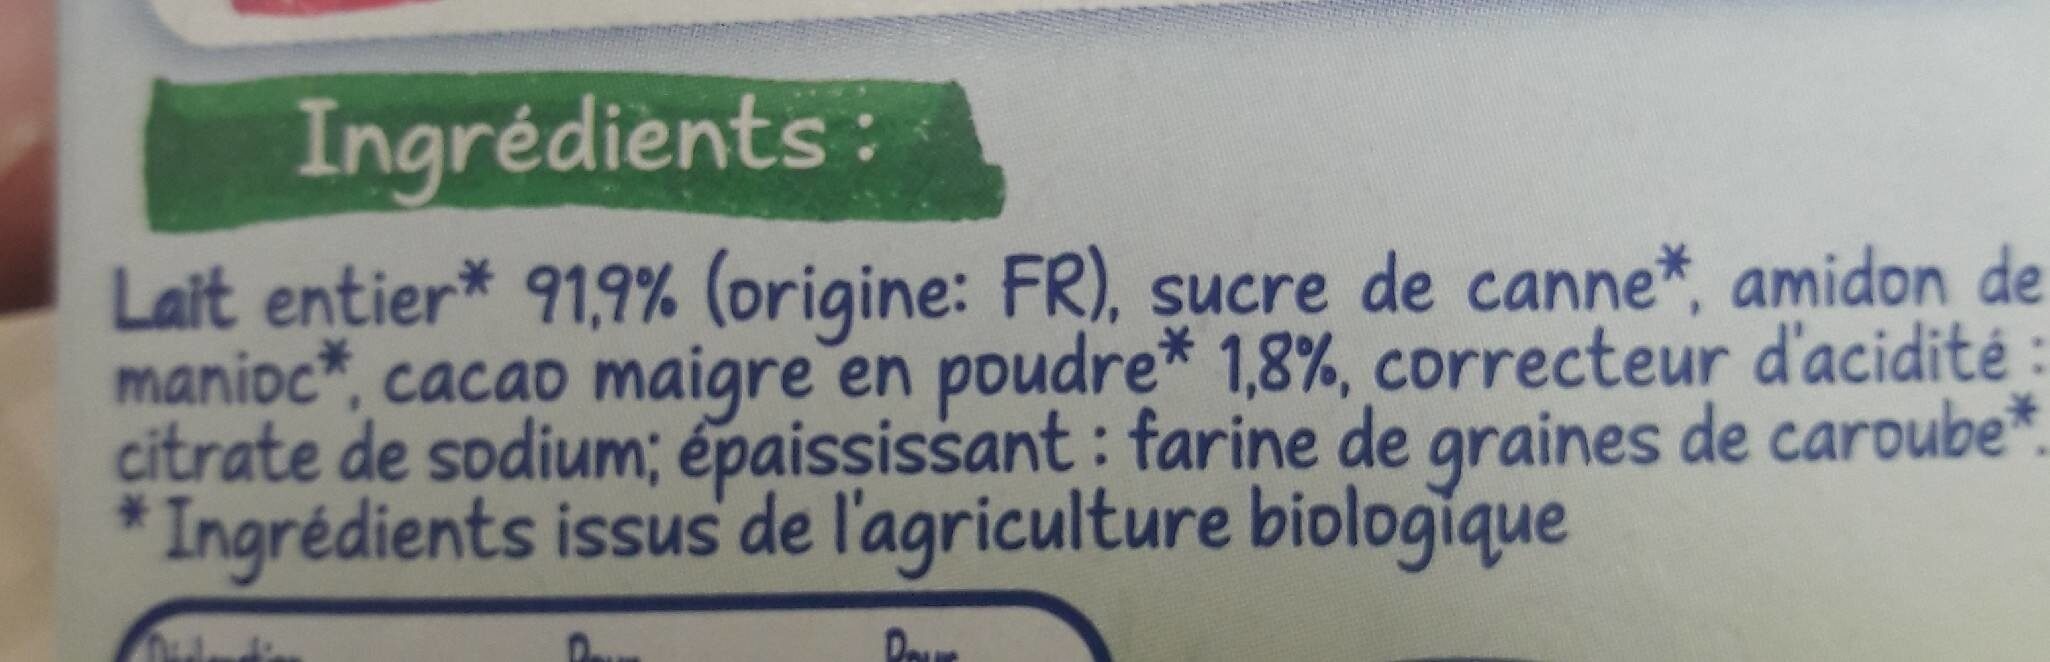 Nestle petit gourmand - Ingredients - fr